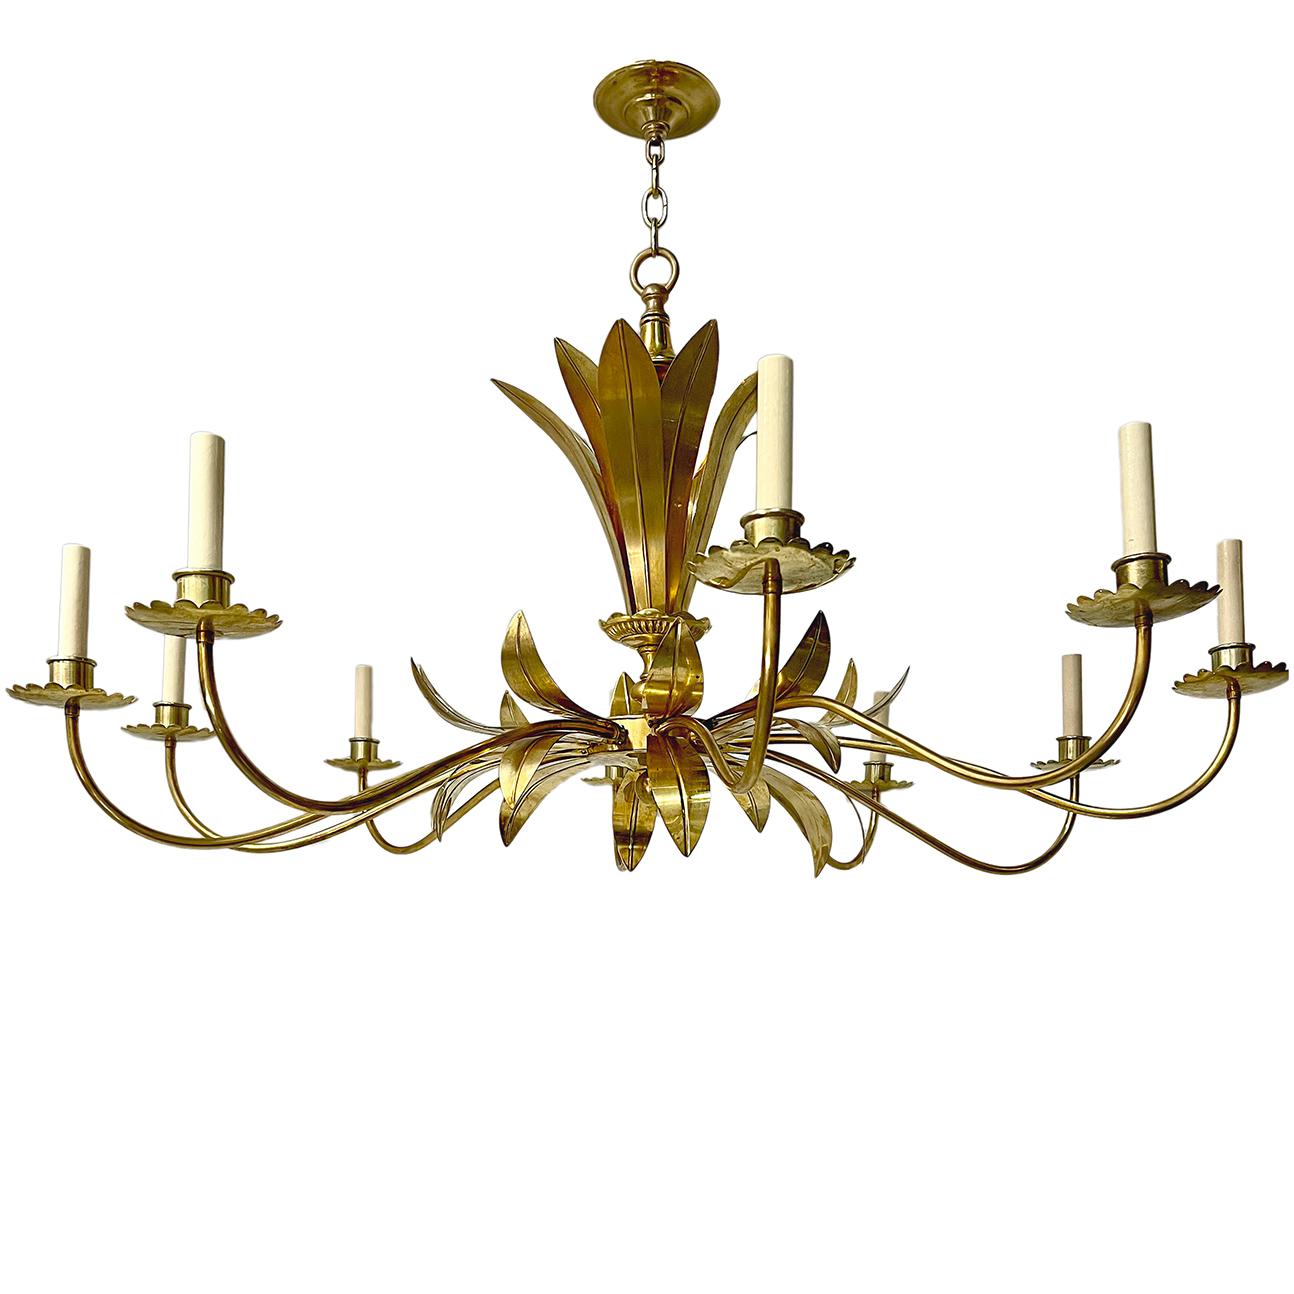 A circa 1940's ten-arm gilt metal Italian chandelier with foliage motif.

Measurements:
Diameter: 50